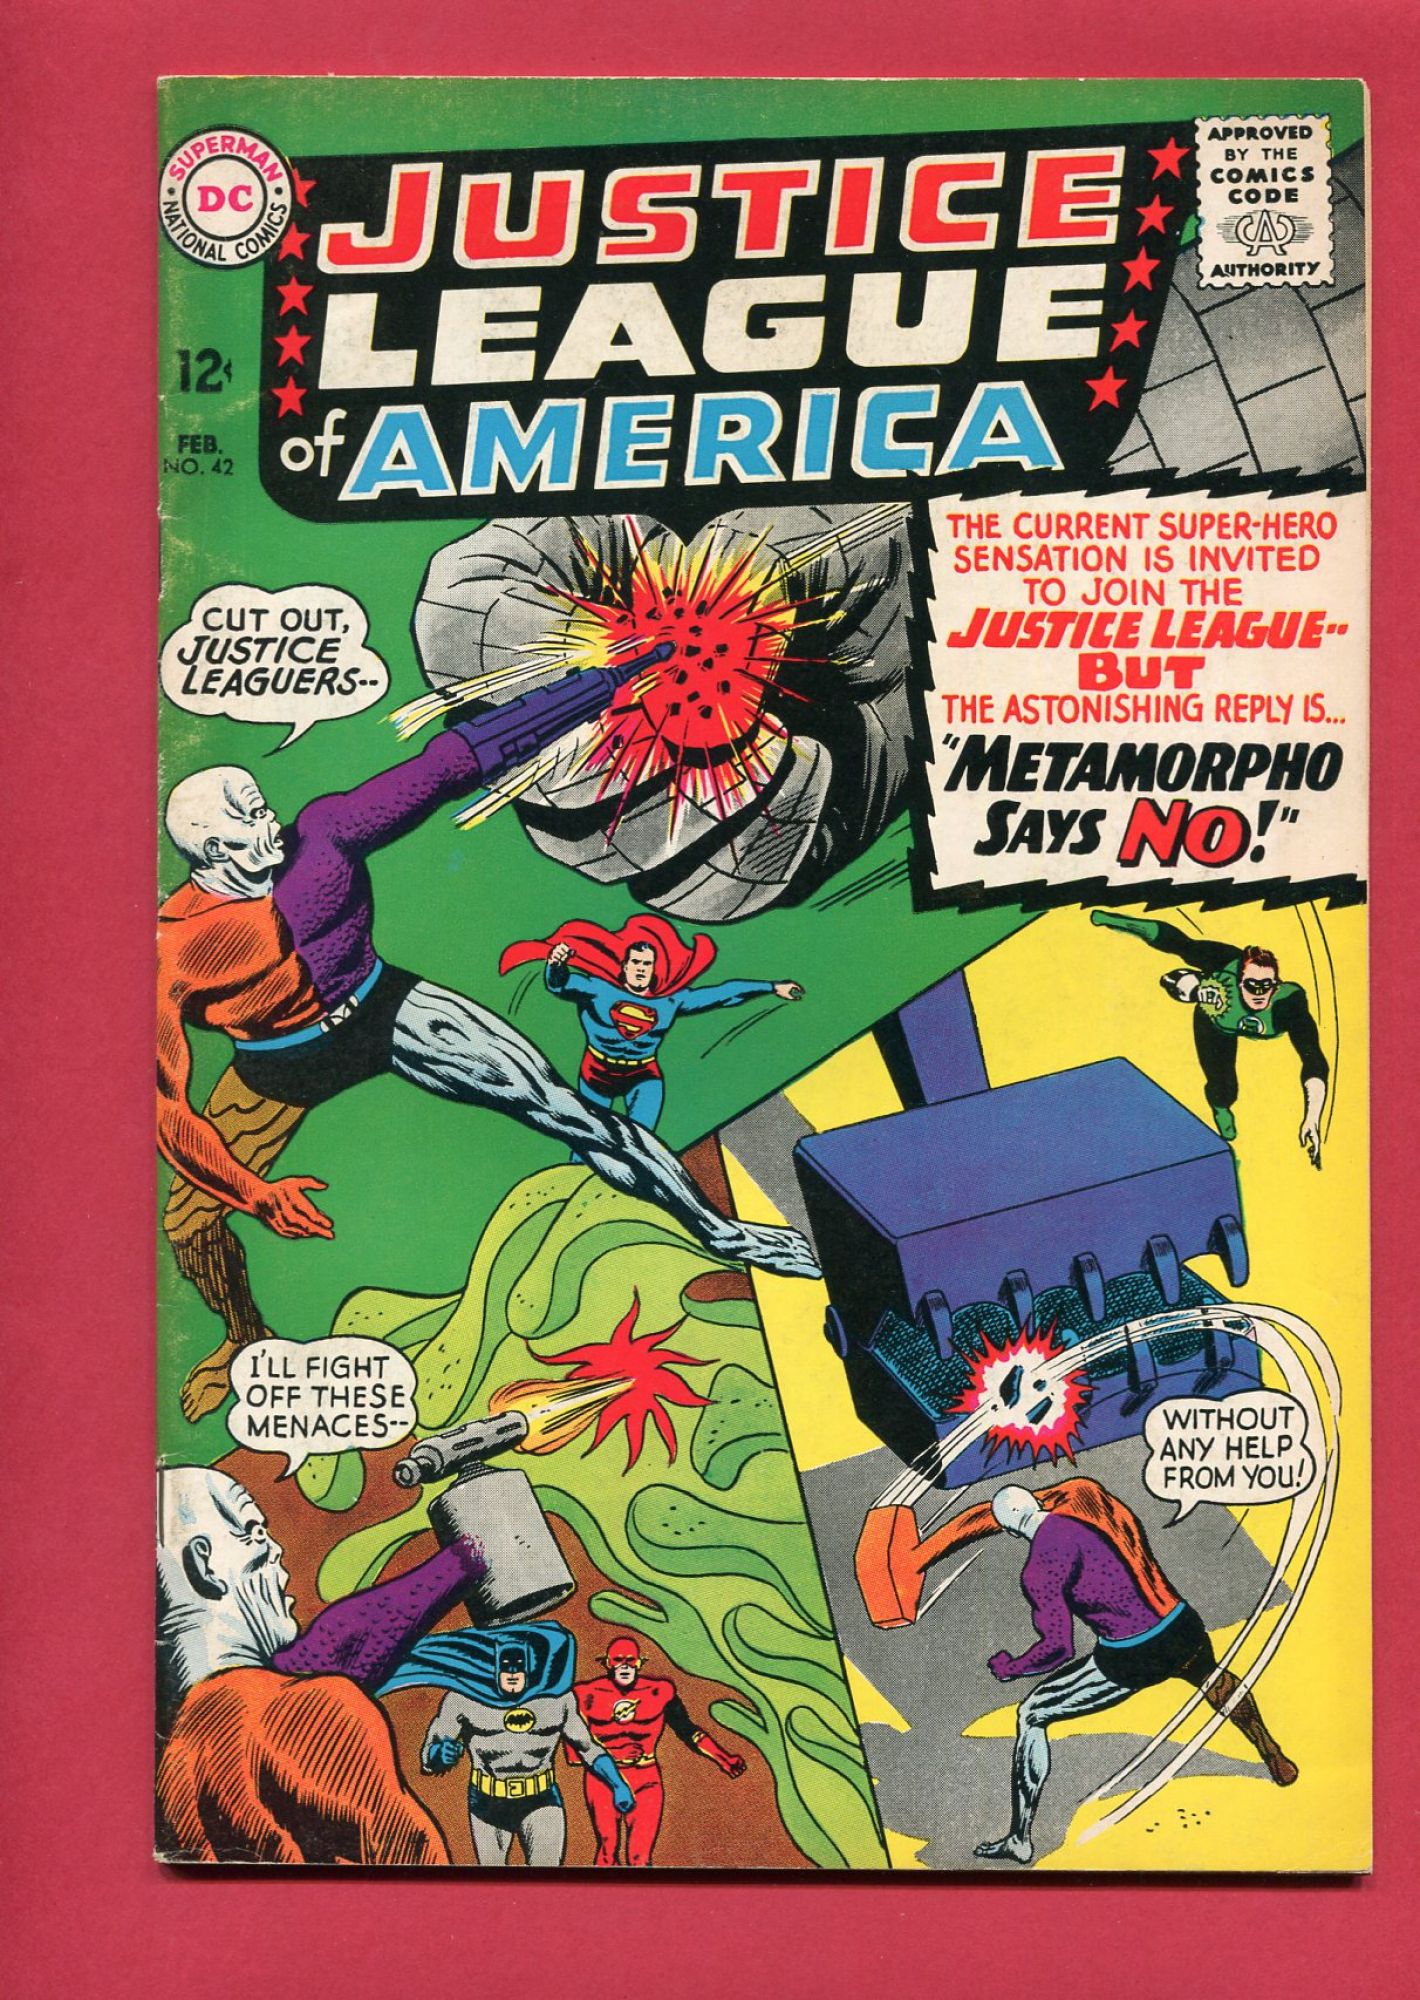 Justice League of America #42, Feb 1966, 6.5 FN+